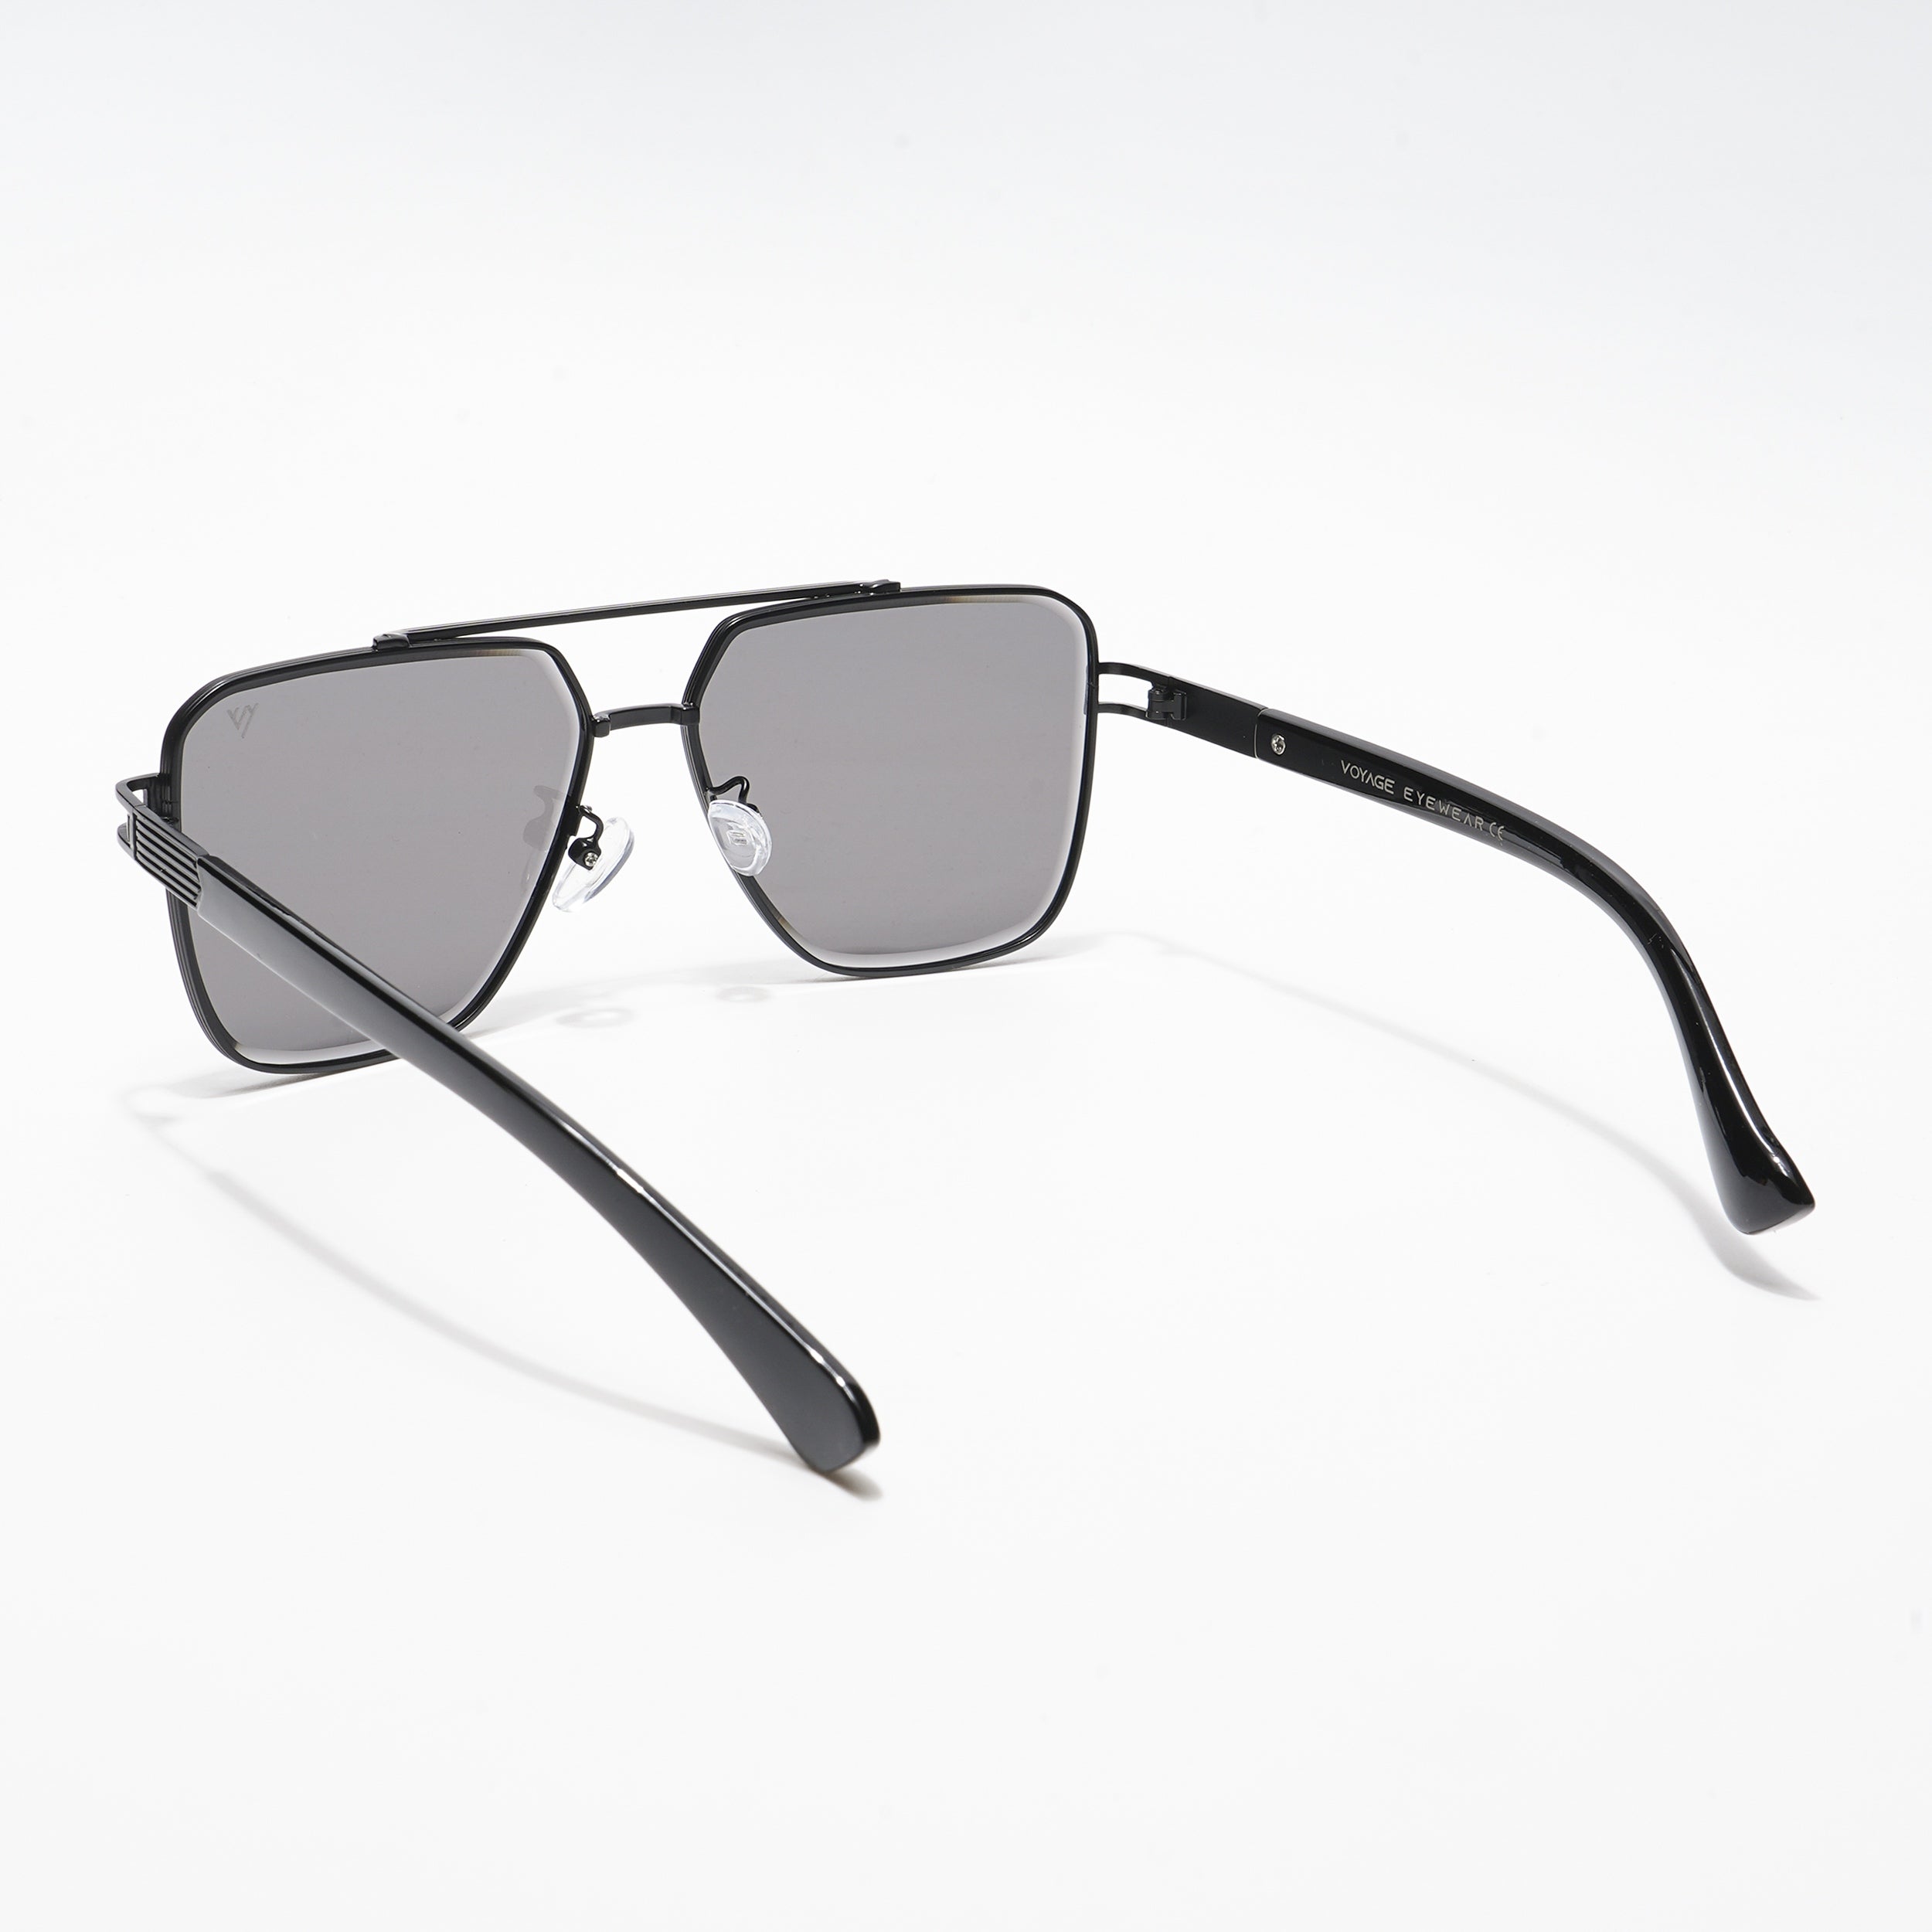 Voyage Wayfarer Sunglasses for Men & Women (Grey Lens | Black Frame - MG5236)